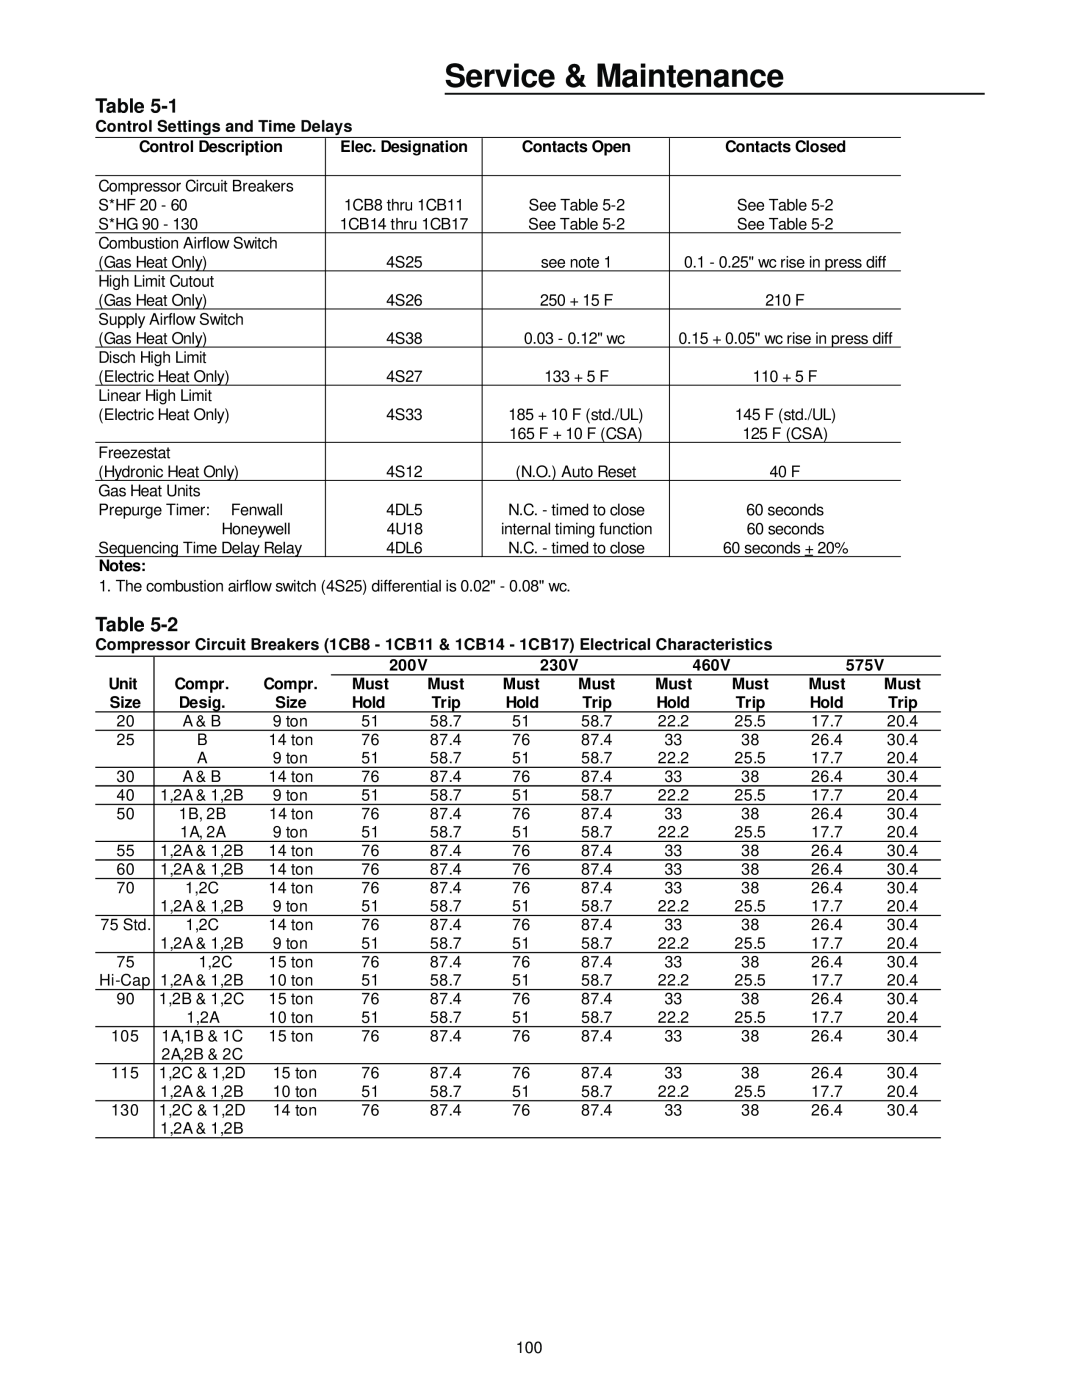 Trane RT-SVX10C-EN specifications Service & Maintenance, Table 